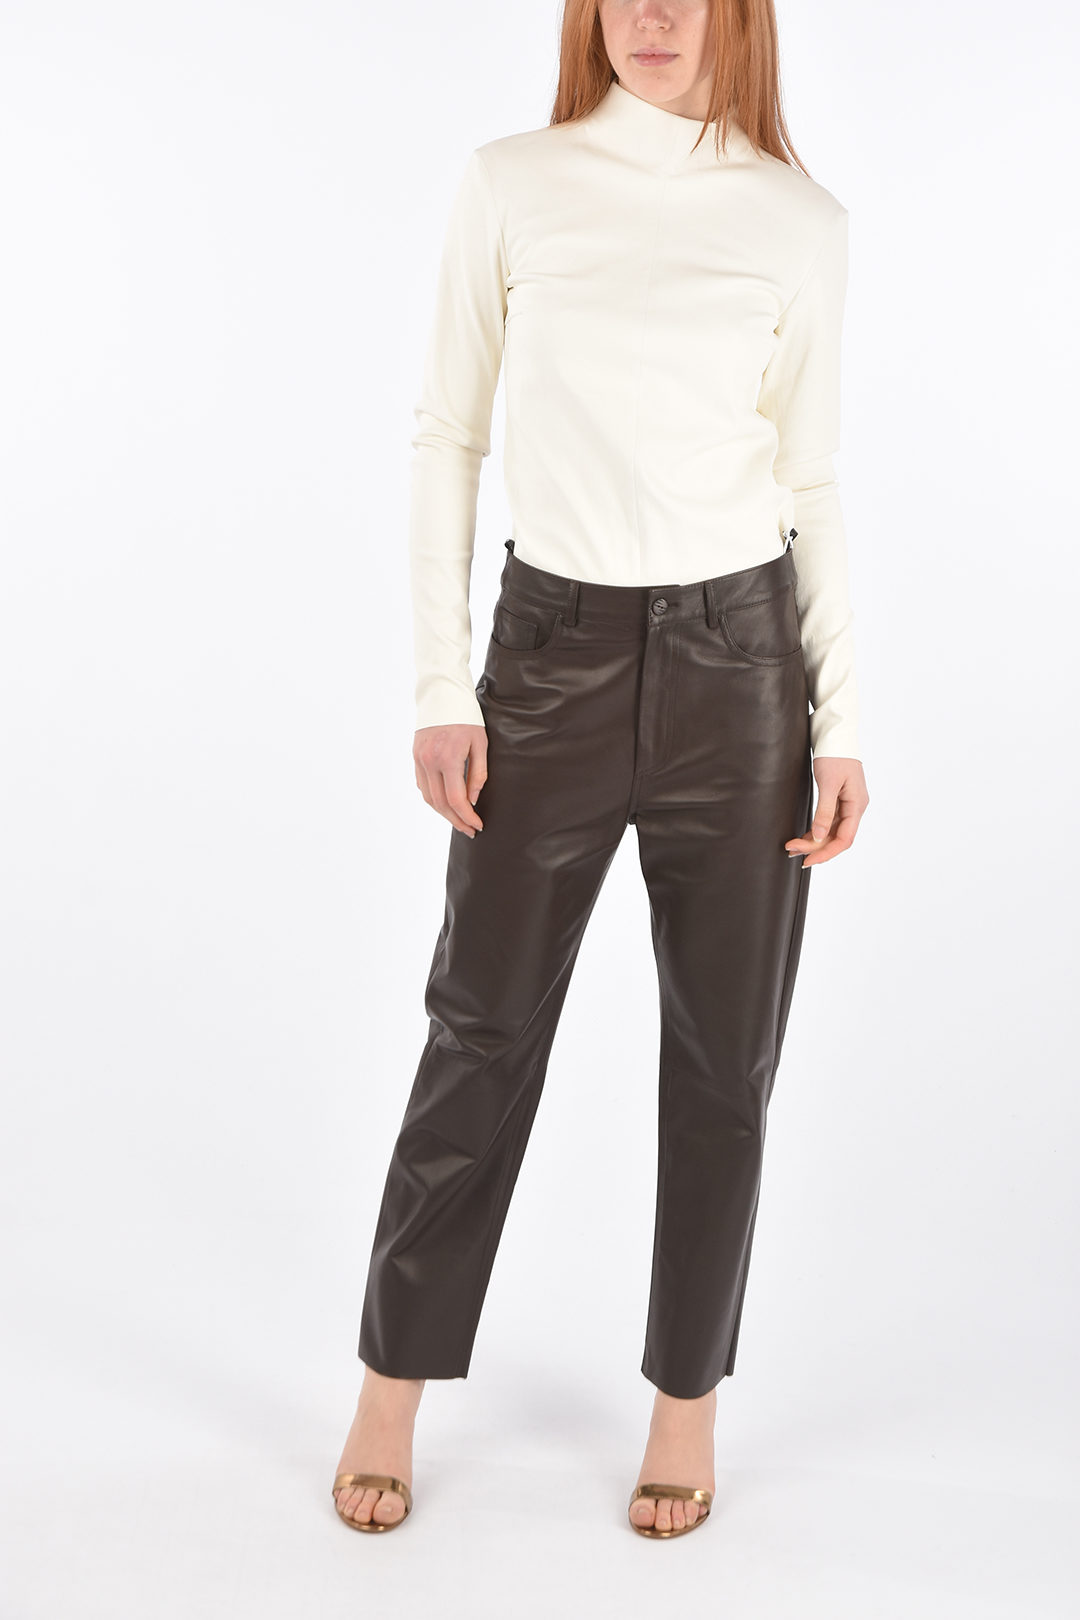 DROMe 5 Pocket Leather Pants women - Glamood Outlet